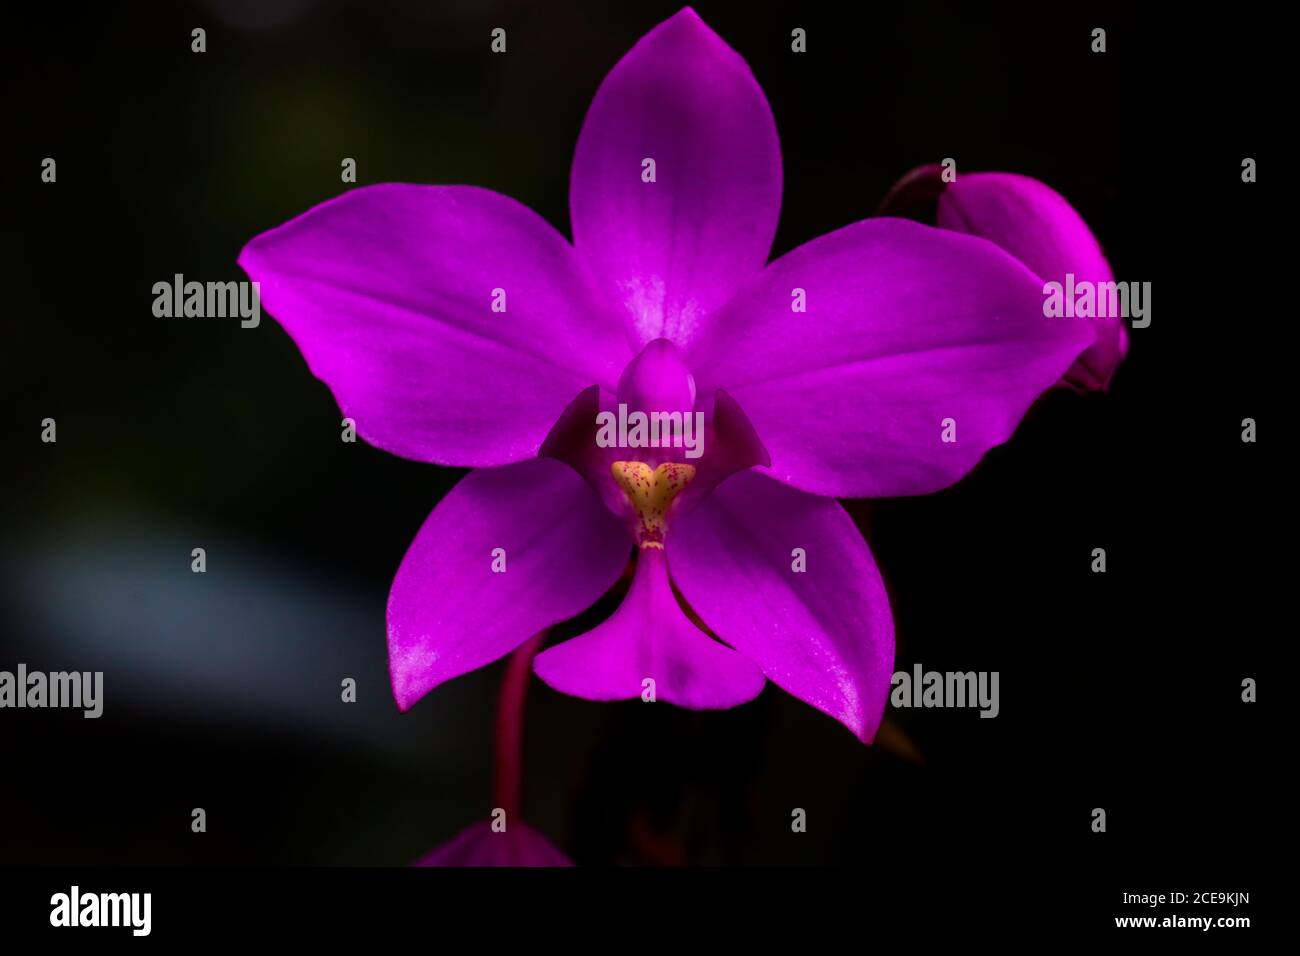 purple orchid flower on dark background Stock Photo